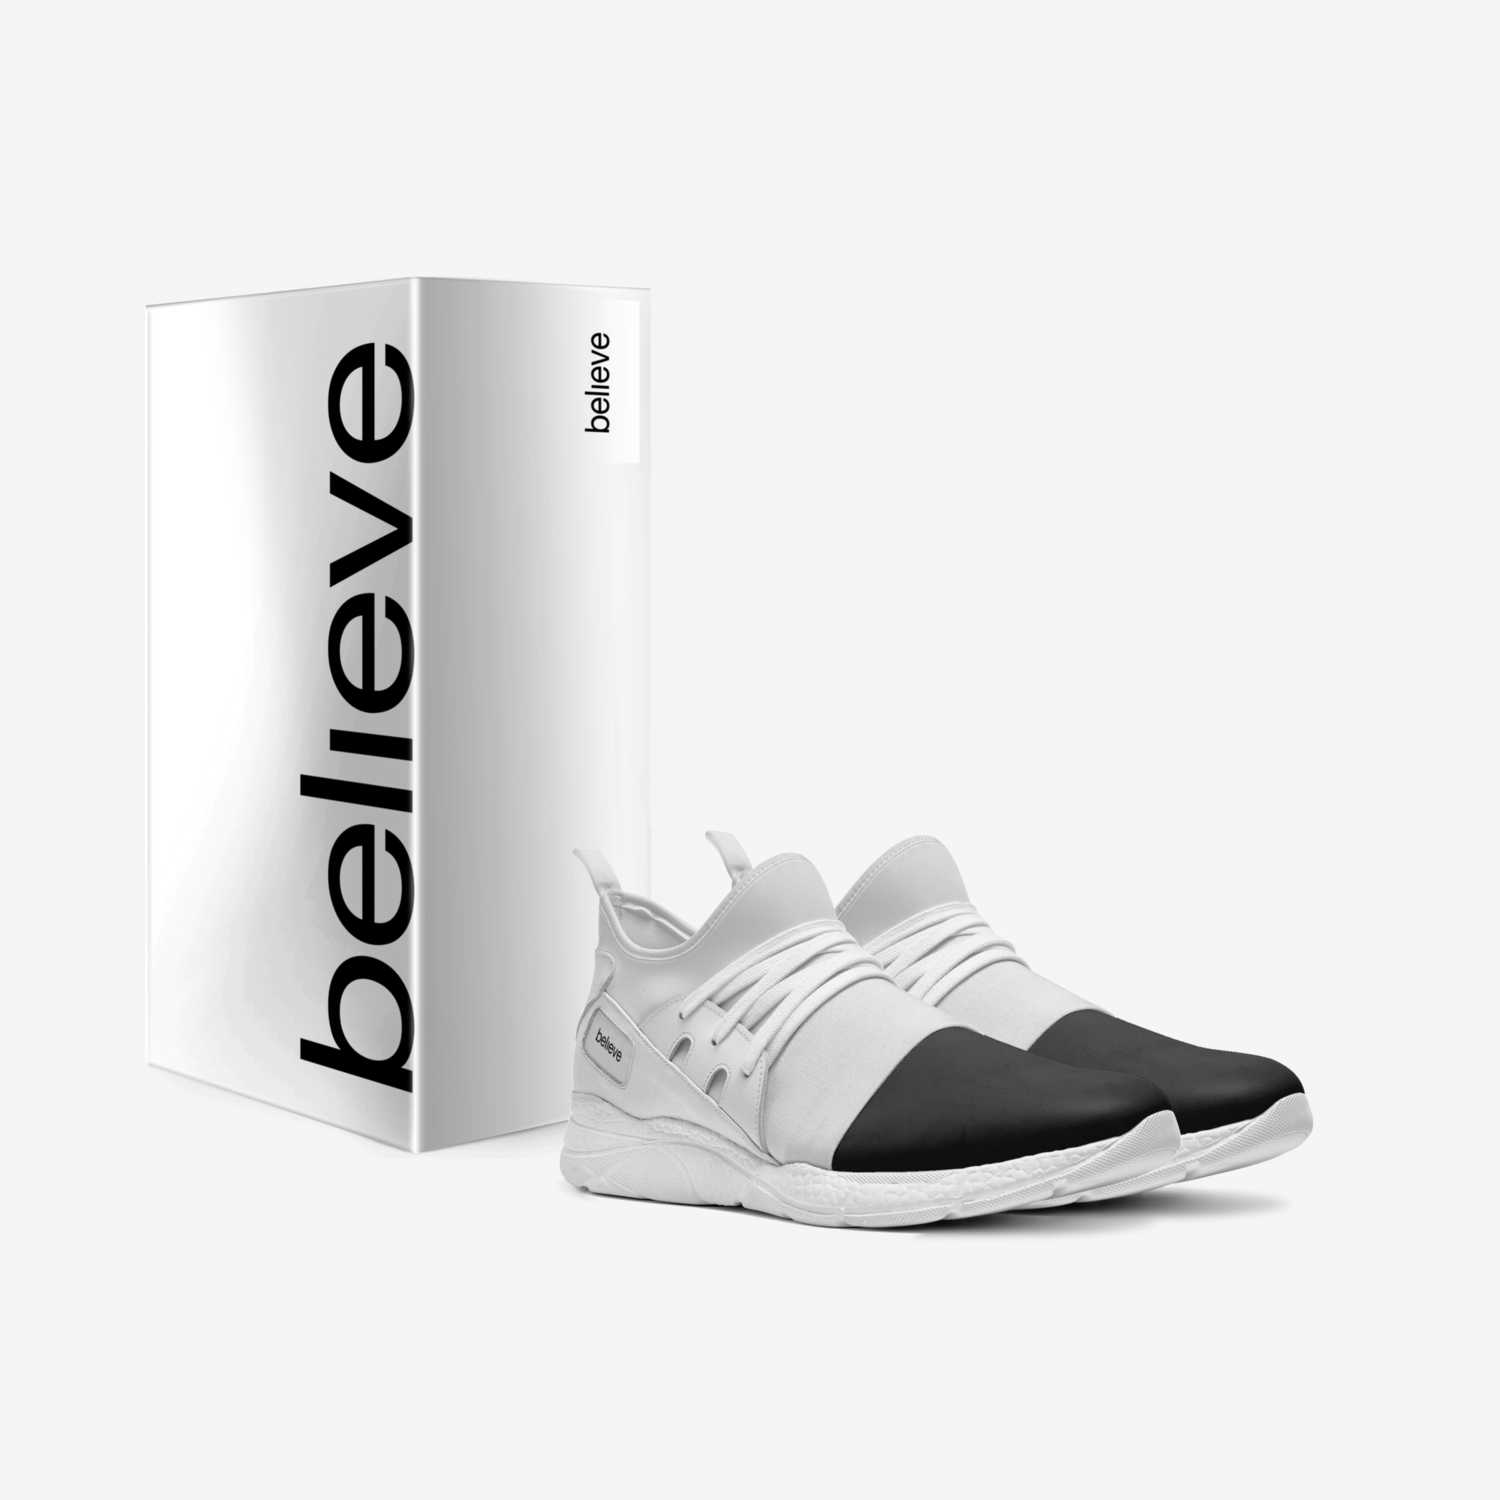 believe 2.1 custom made in Italy shoes by Derek Jones | Box view